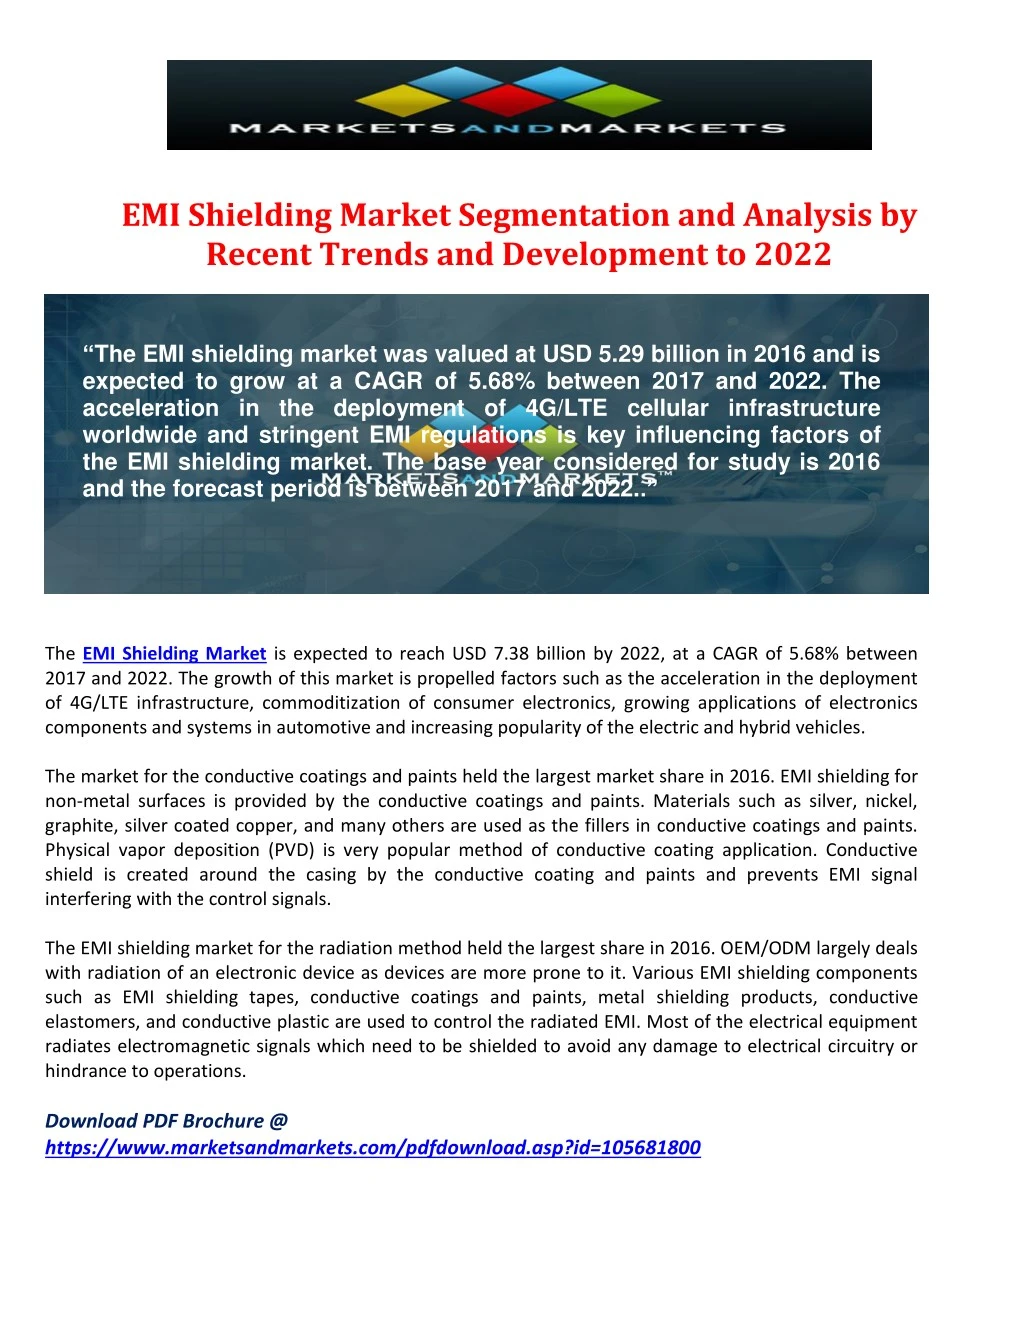 emi shielding market segmentation and analysis